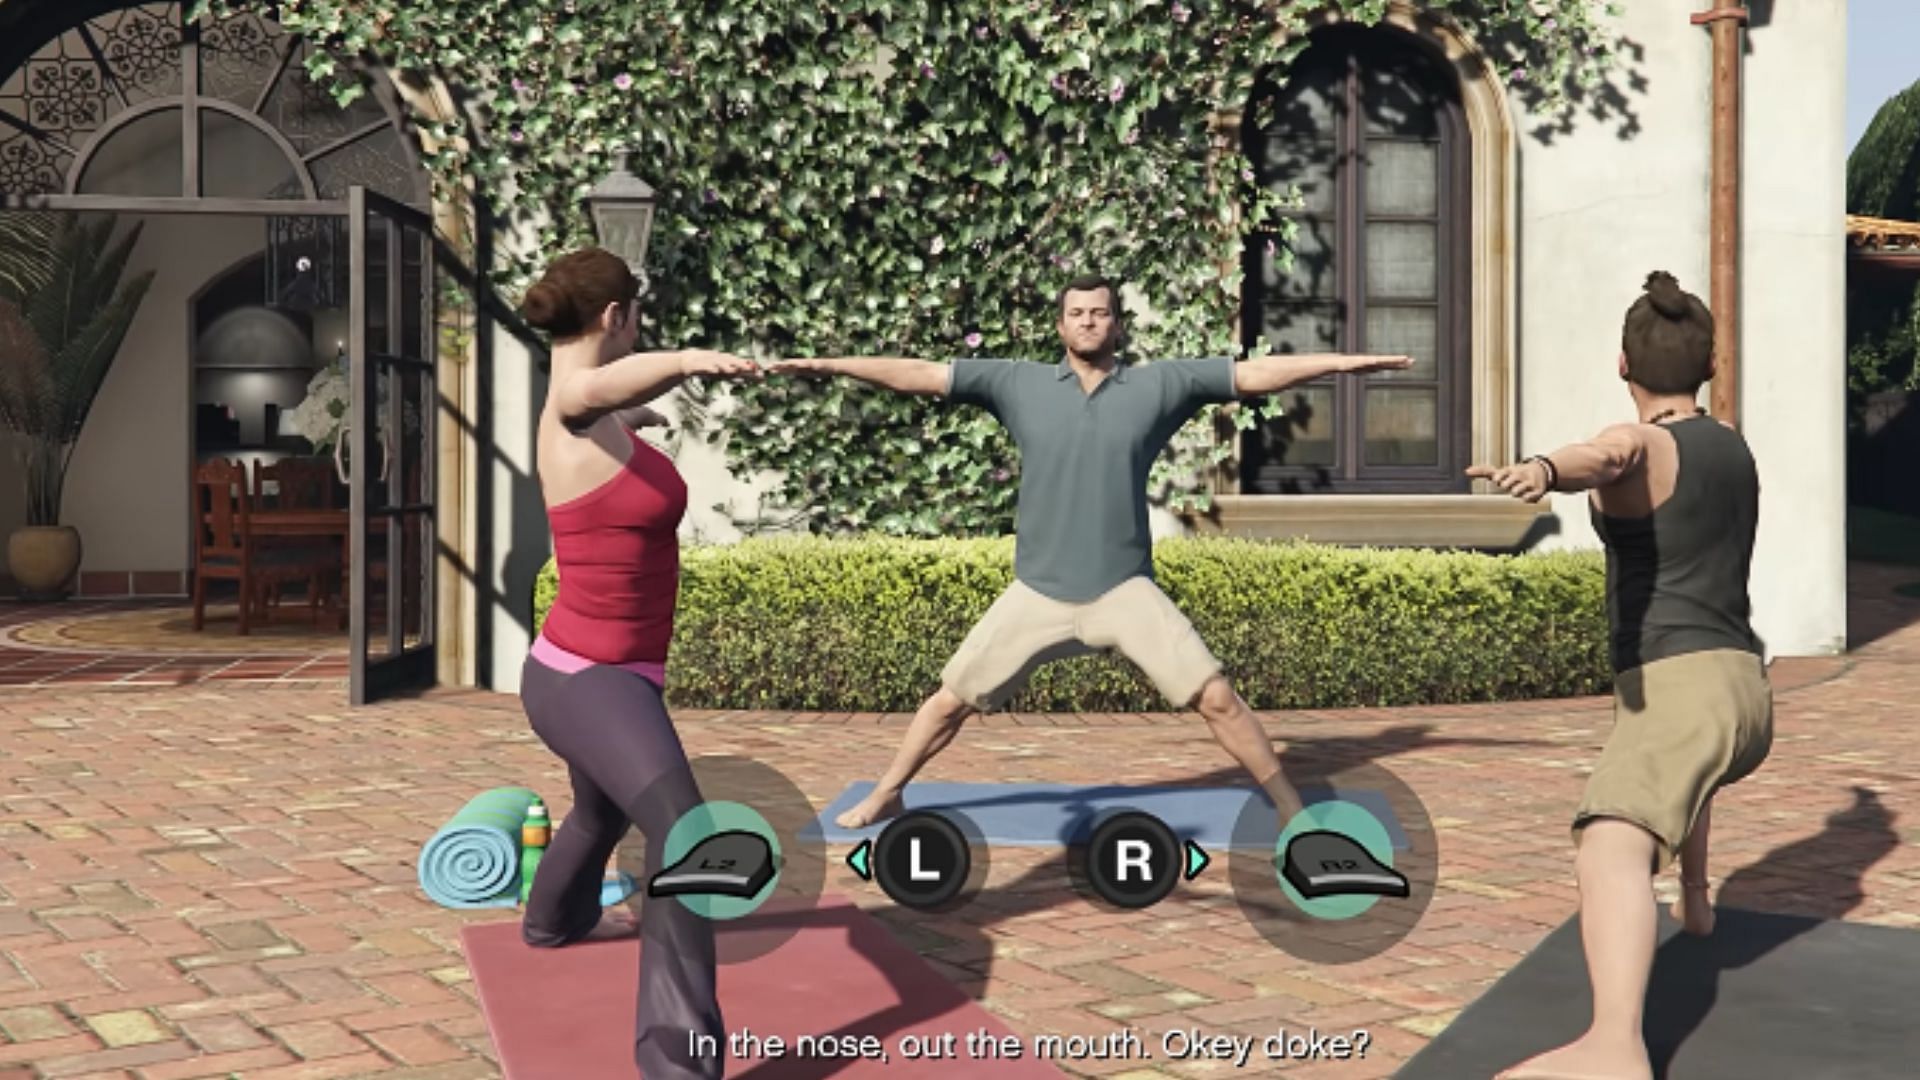 Michael performing Yoga in GTA 5 (Image via YouTube/GTA Series Videos)